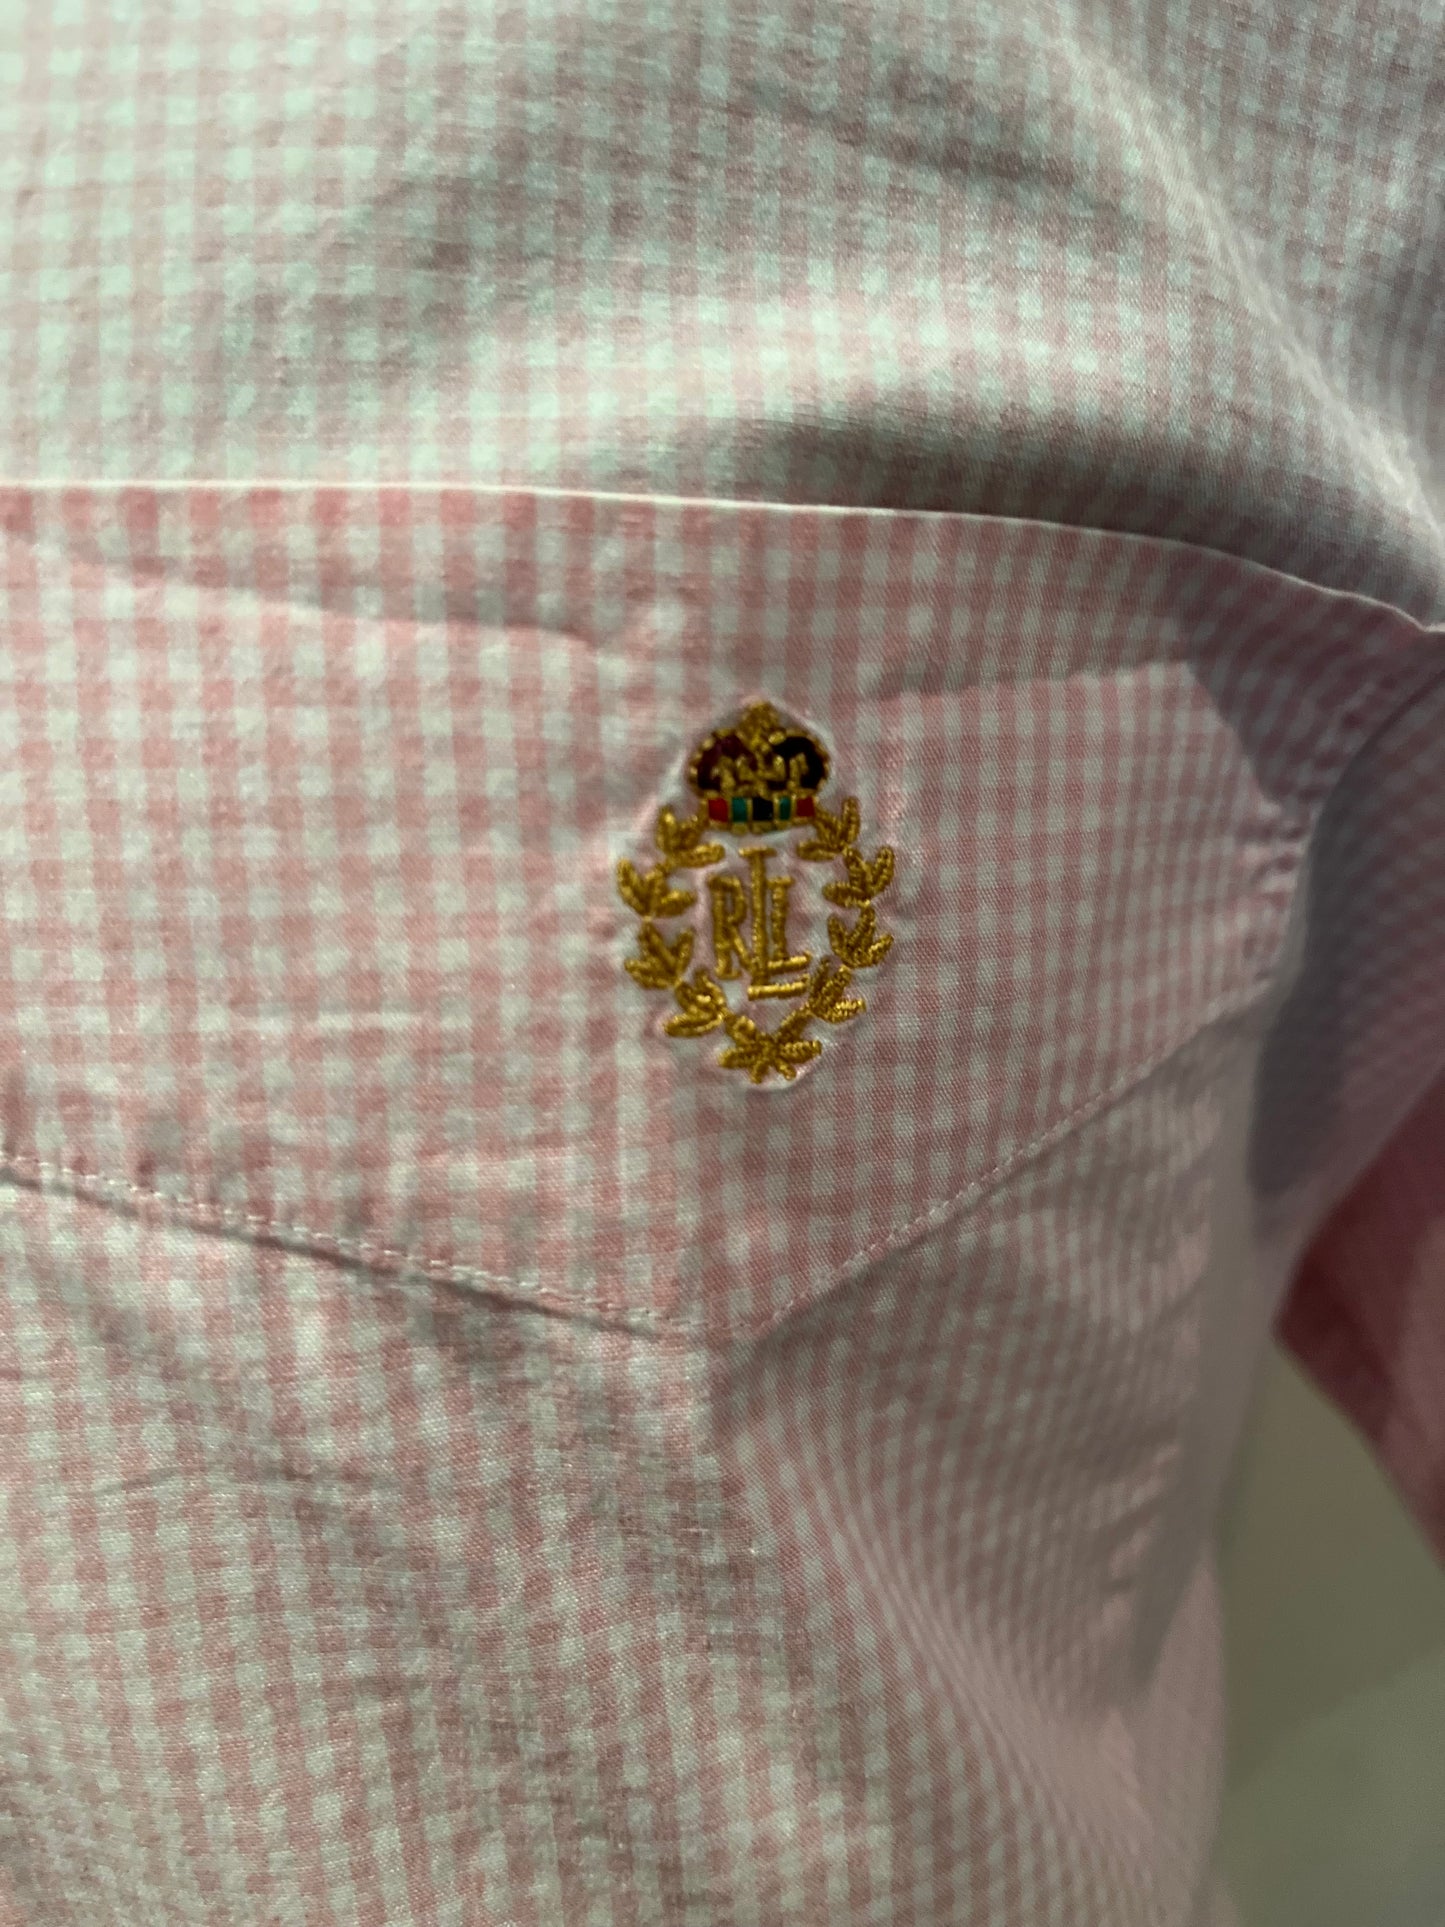 Lauren Ralph Lauren Men’s 100% Cotton White Pink Gingham Big Fit Shirt Size L Fits more like an XXL